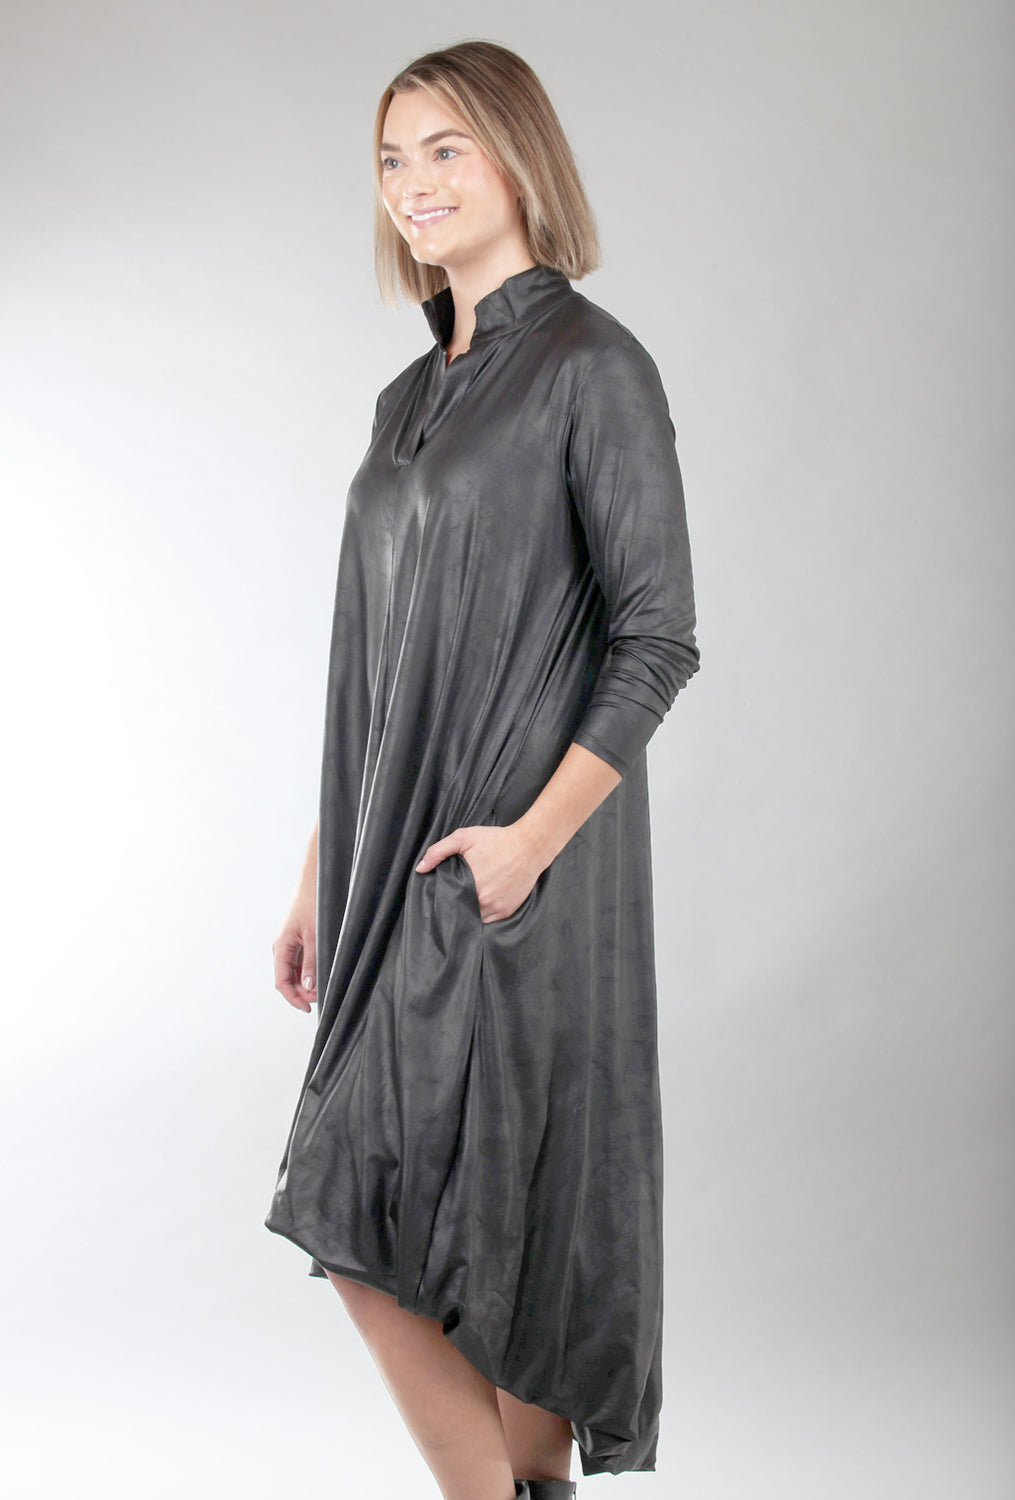 Kozan Artemis Dress, Black Vintage 